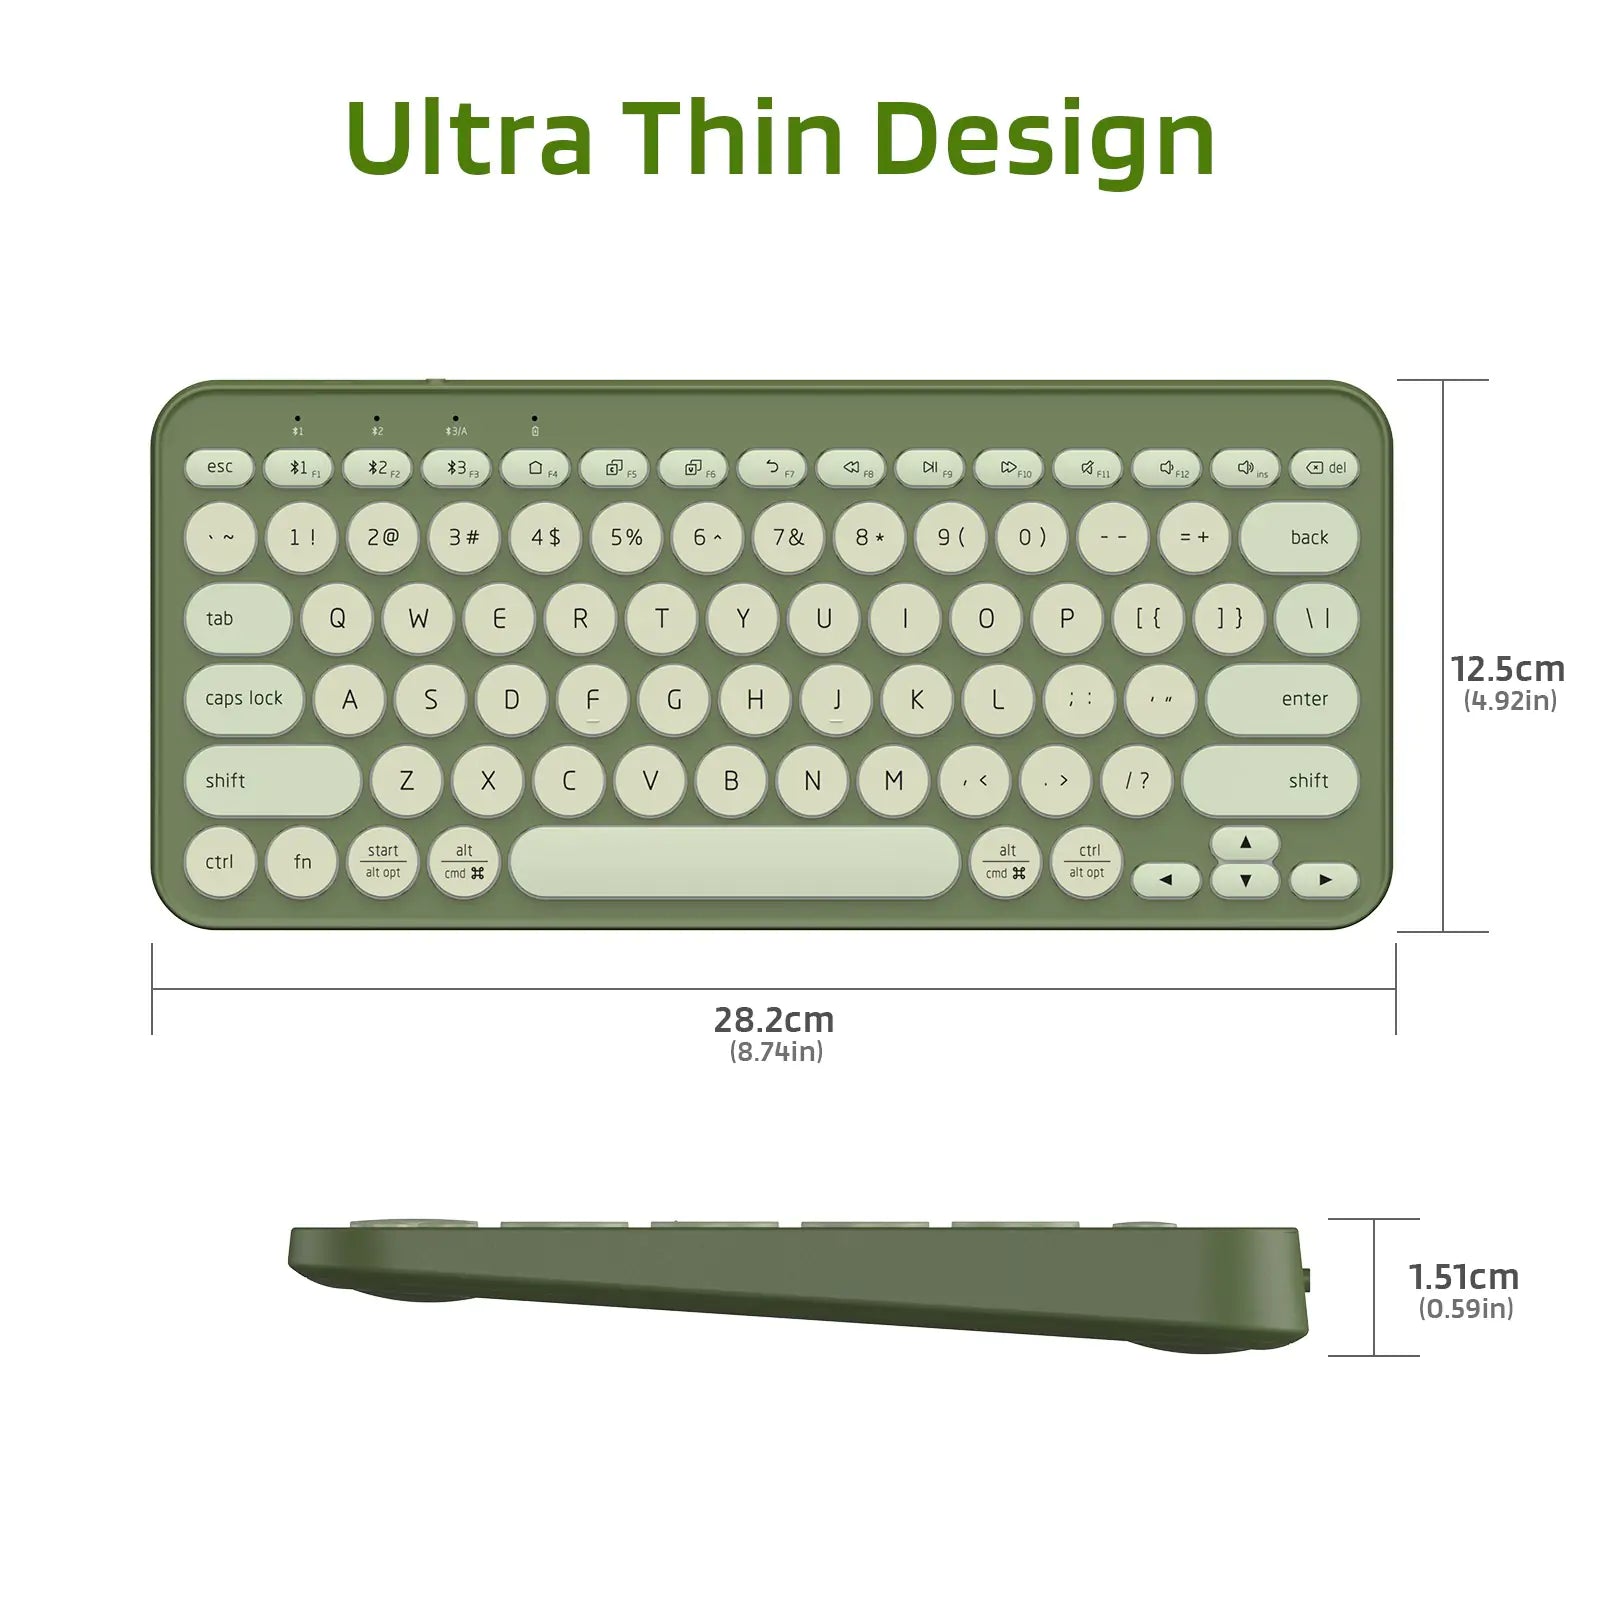 LTC MK791 Multi-Device Bluetooth Keyboard, Rechargeable Compact Slim Wireless Keyboards w/ 79 Keys, Low-Profile & Colorful, Green